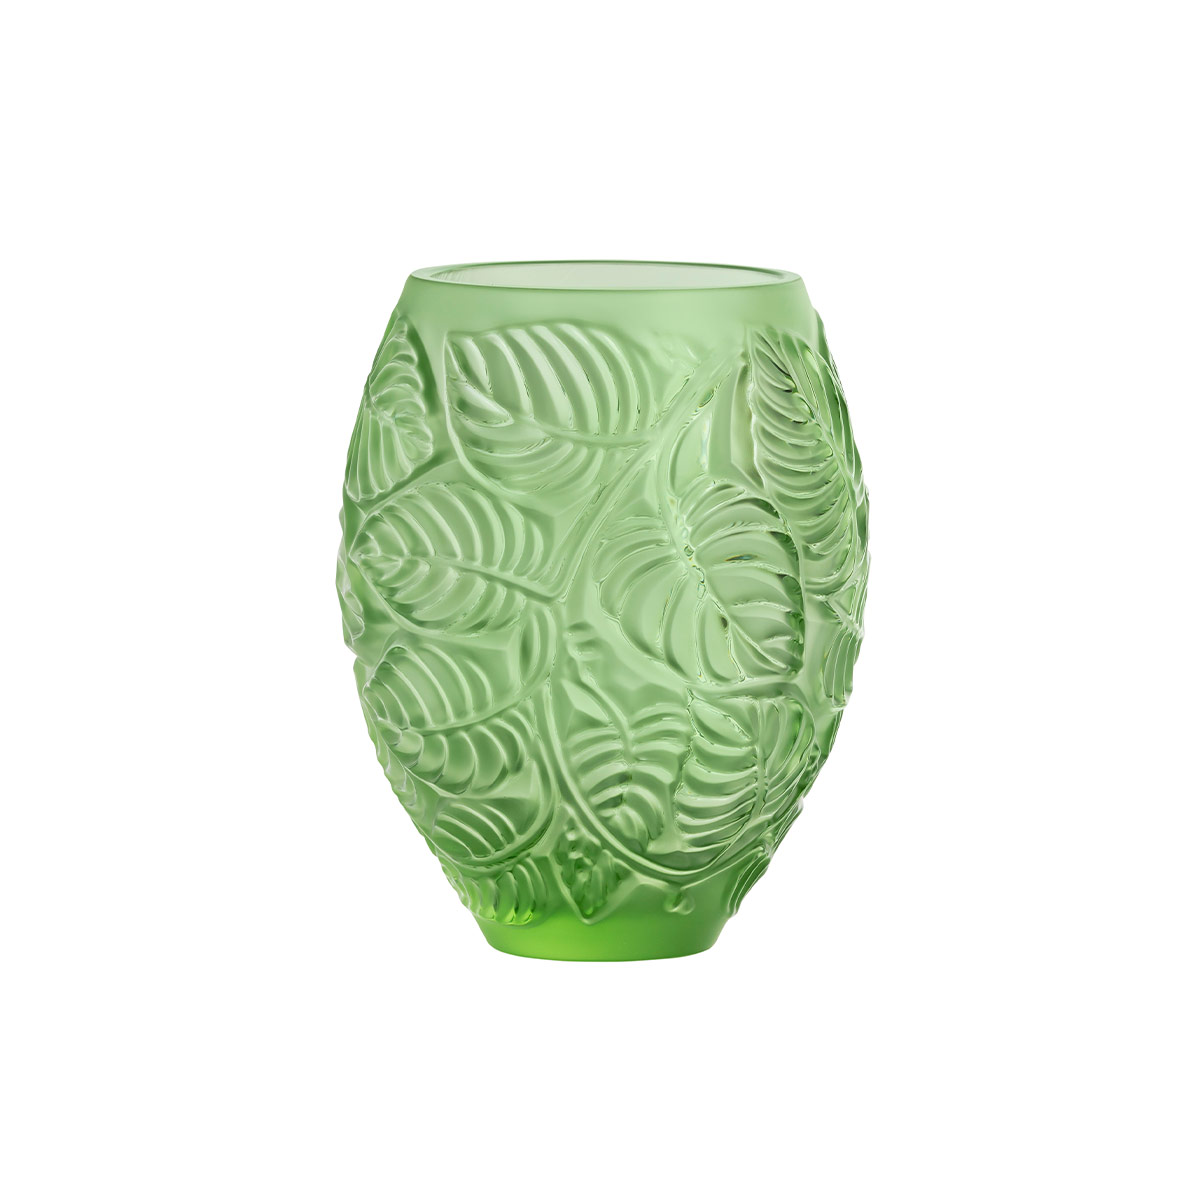 Lalique | Vase 16.5 cm green |FRANZEN.de/en/